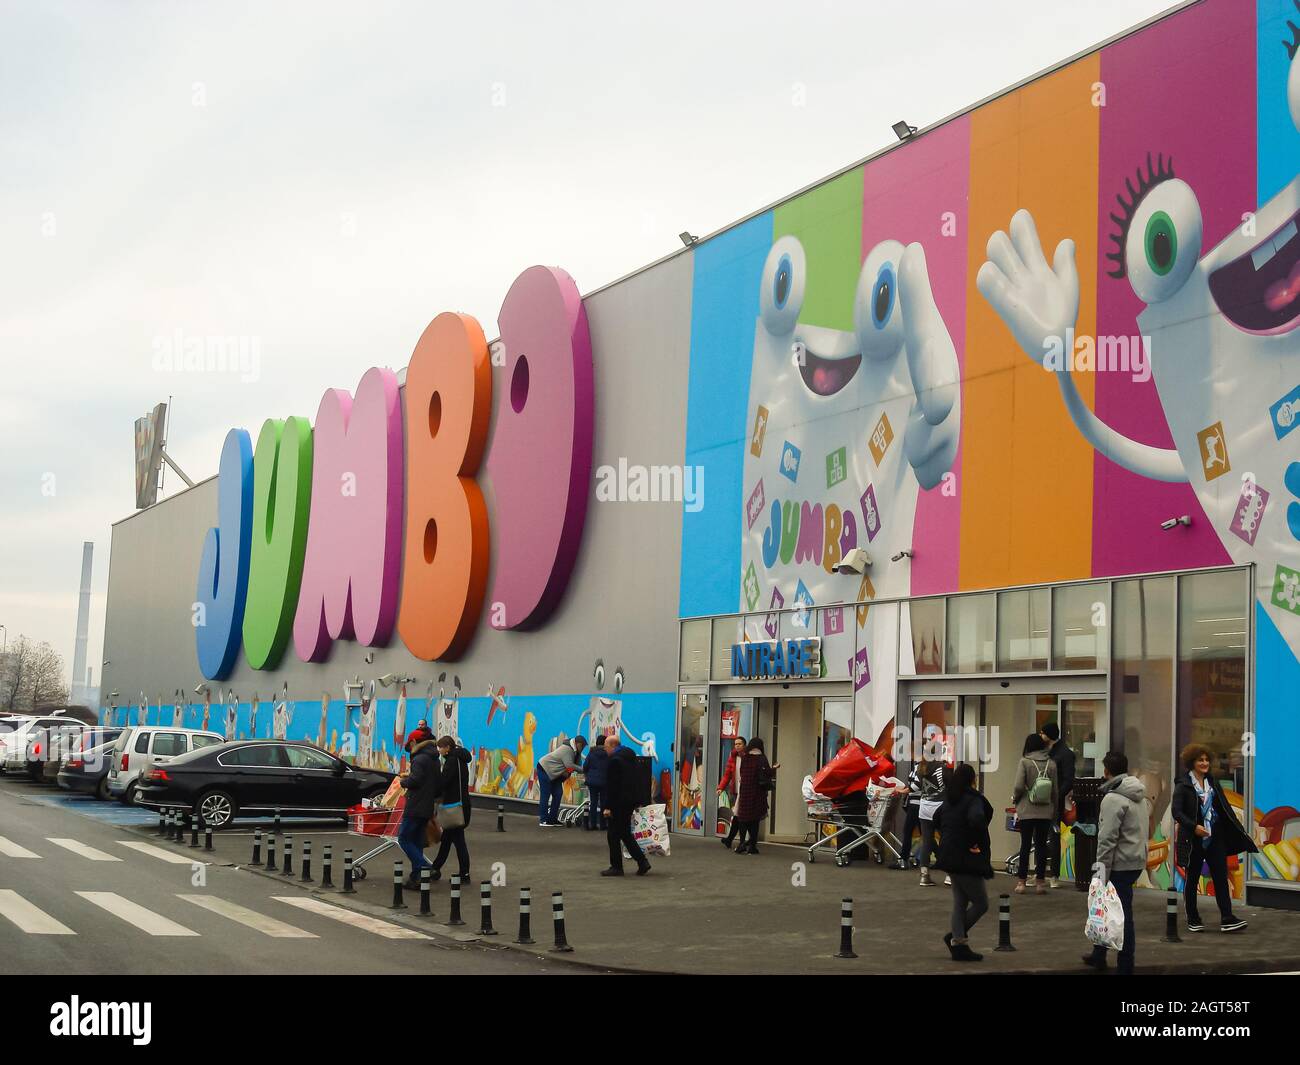 Jumbo Shopping Mall. Toy Store. Big Sign, Logo Of Jumbo Store In Bucharest,  Romania, 2019 Stock Photo - Alamy